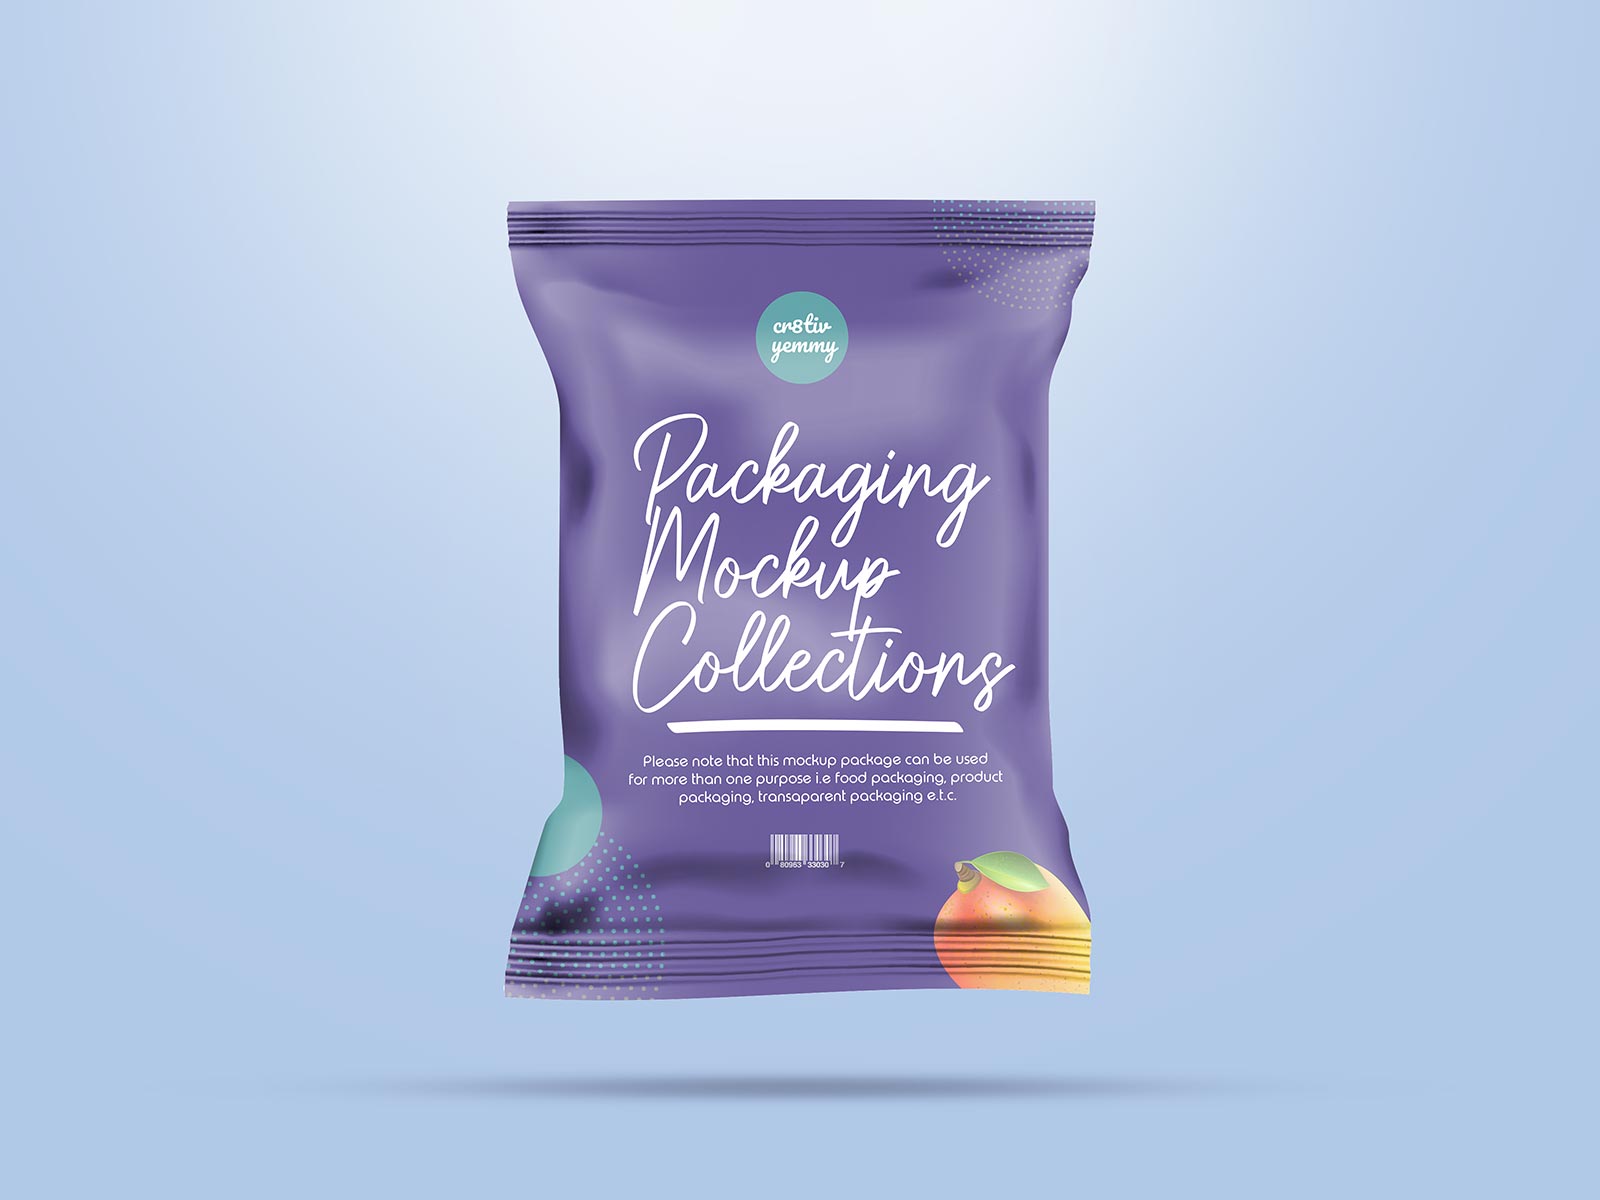 Free Snack Pack Packaging Mockup PSD (1)